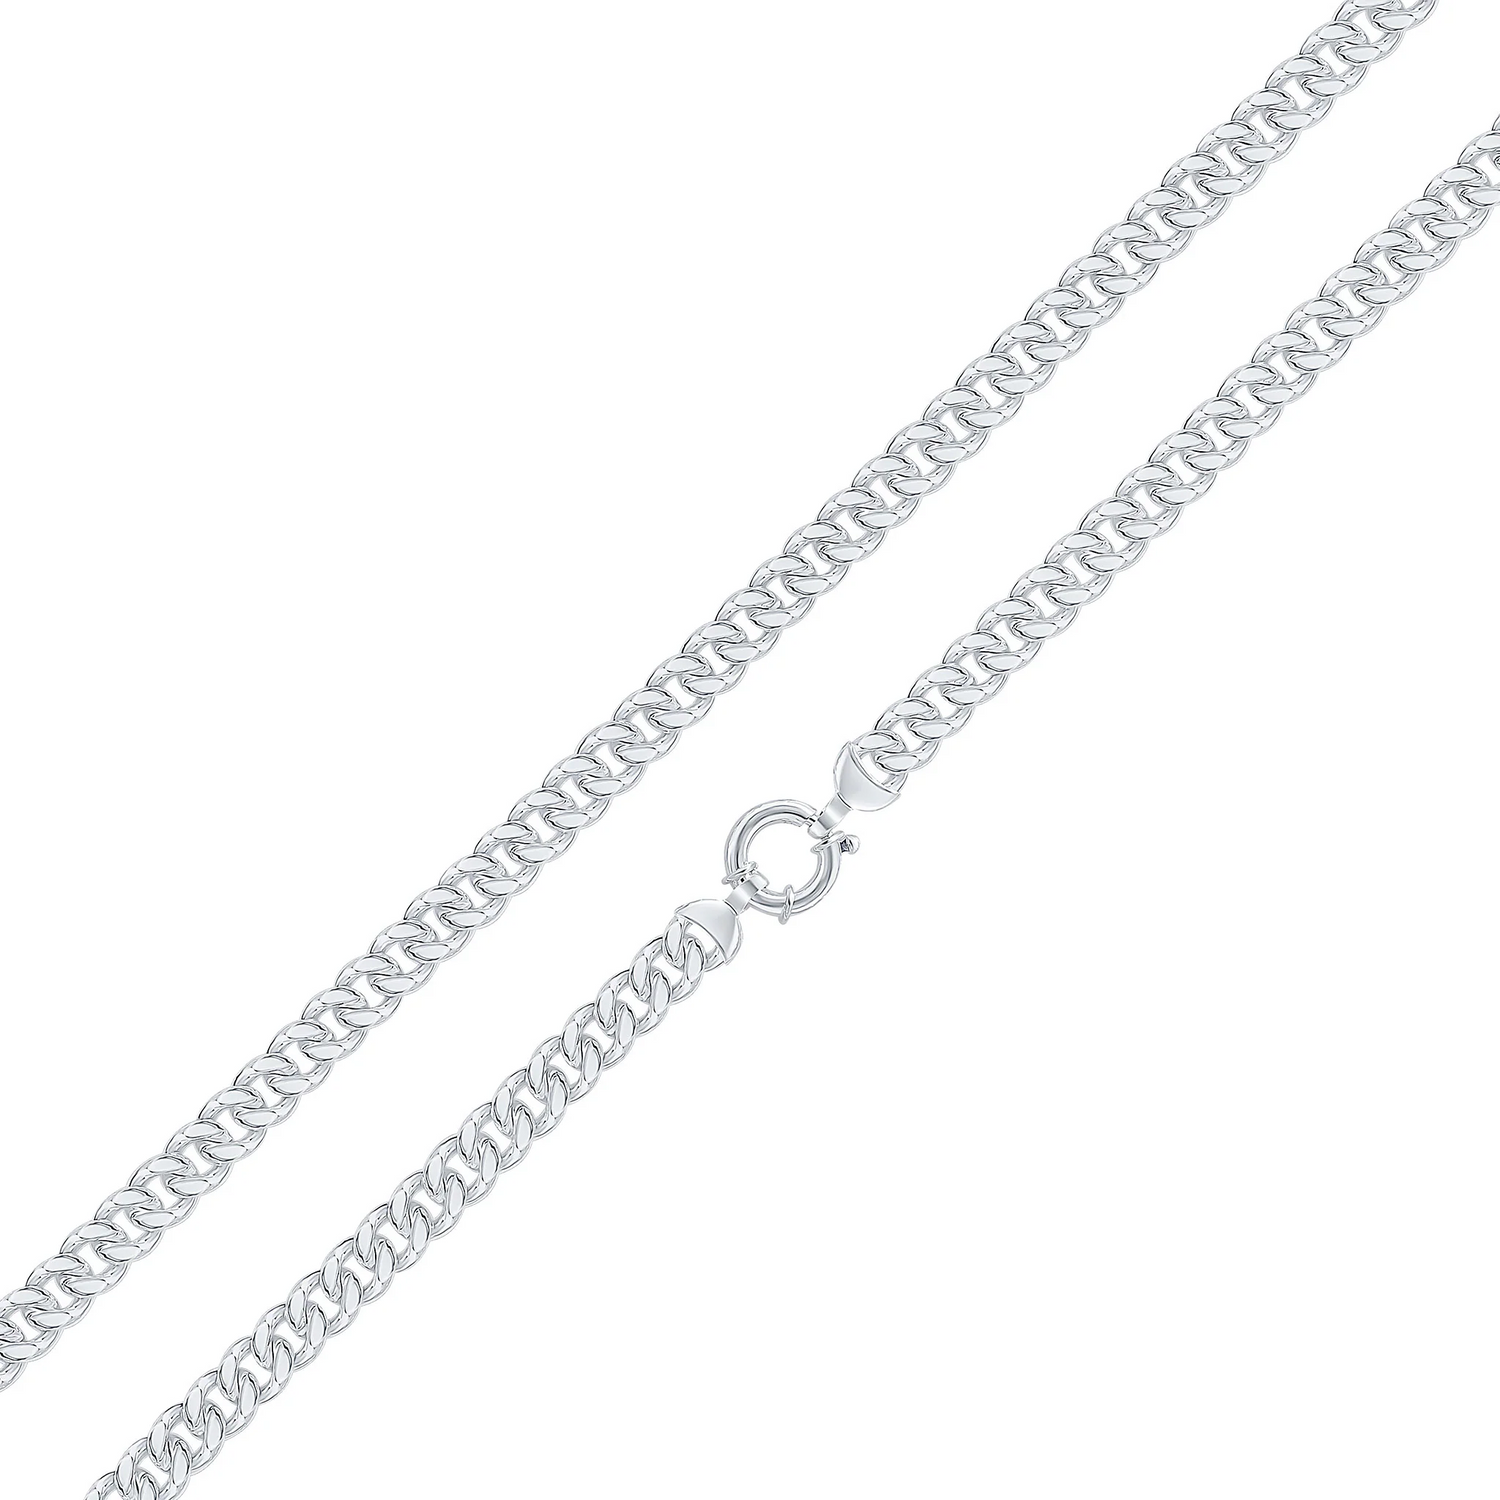 Silver Handmade 9mm Curb Chain or Bracelet - Robert Anthony Jewellers, Edinburgh